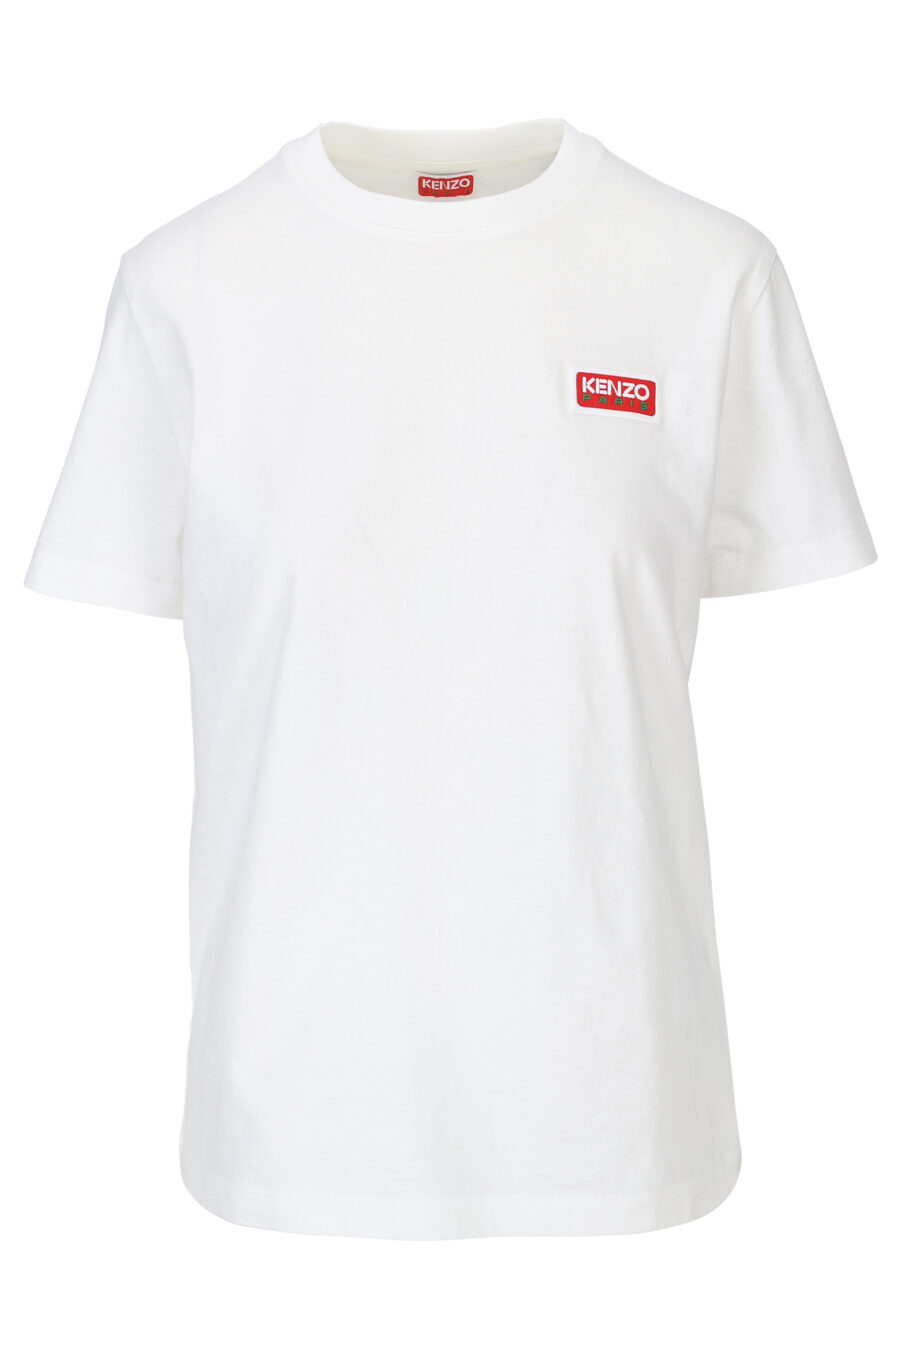 White oversize T-shirt with "kenzo paris" logo - 3612230520875